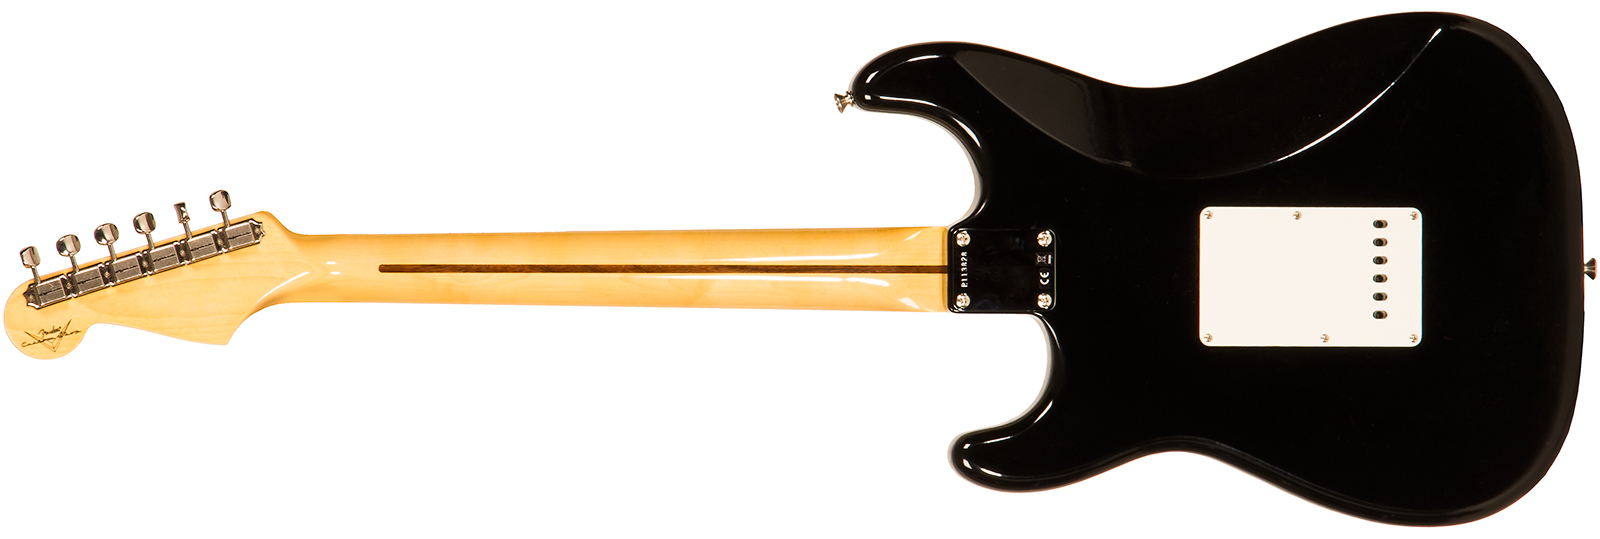 Fender Custom Shop Strat 1958 3s Trem Mn #r113828 - Closet Classic Black - E-Gitarre in Str-Form - Variation 1